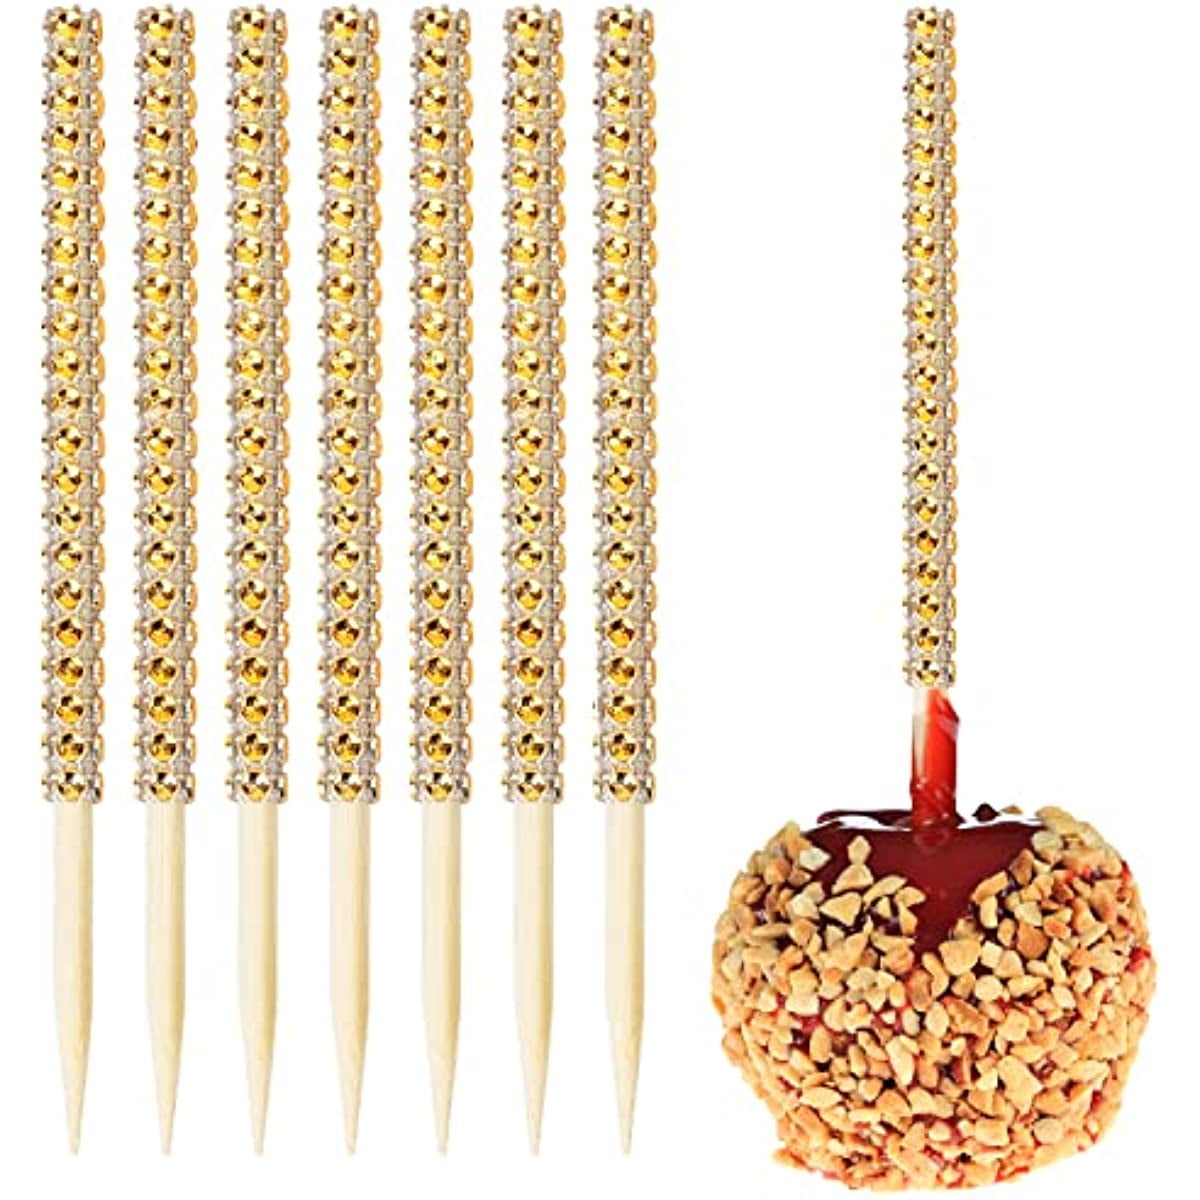 1 Dz. Candy Apple Sticks. Bling Apple Sticks. Ibbyz Shop. Wooden Sticks 